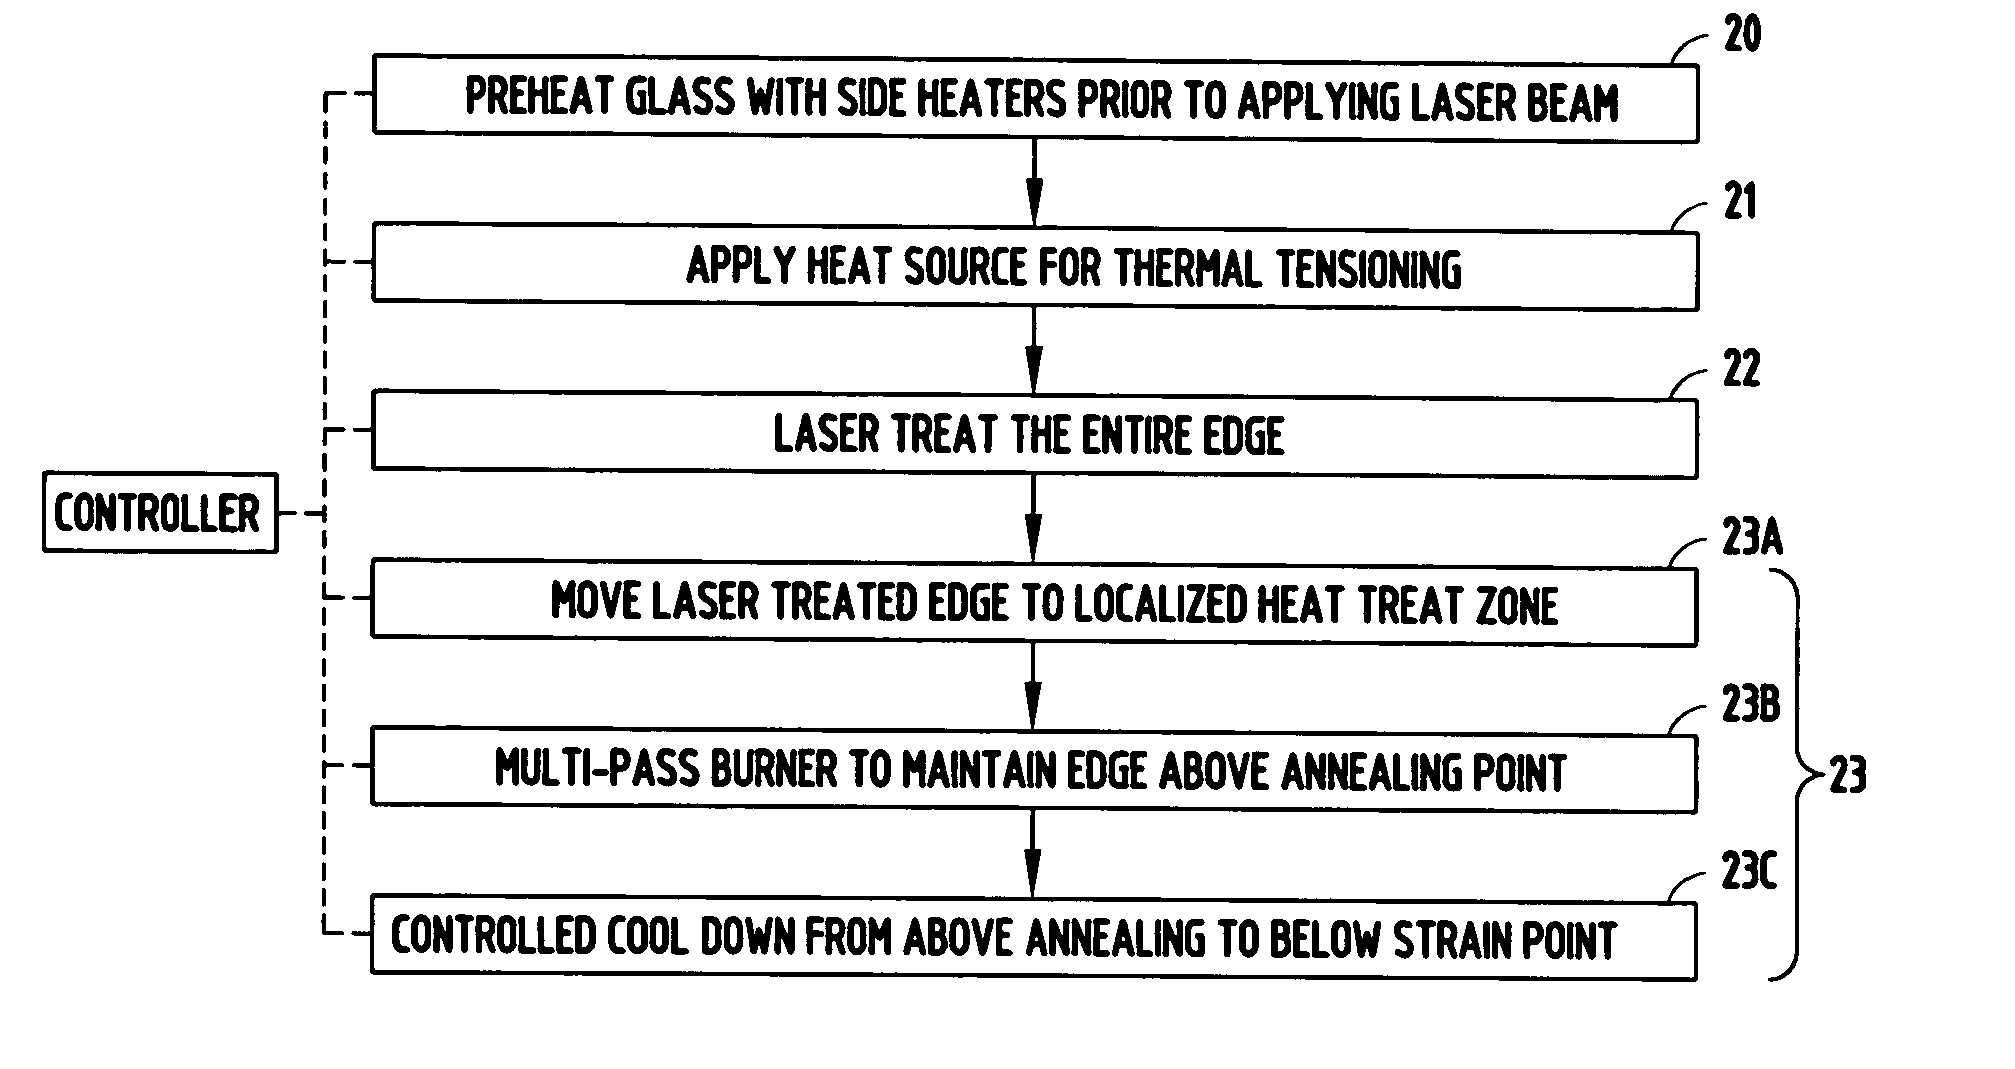 Thermal tensioning during thermal edge finishing